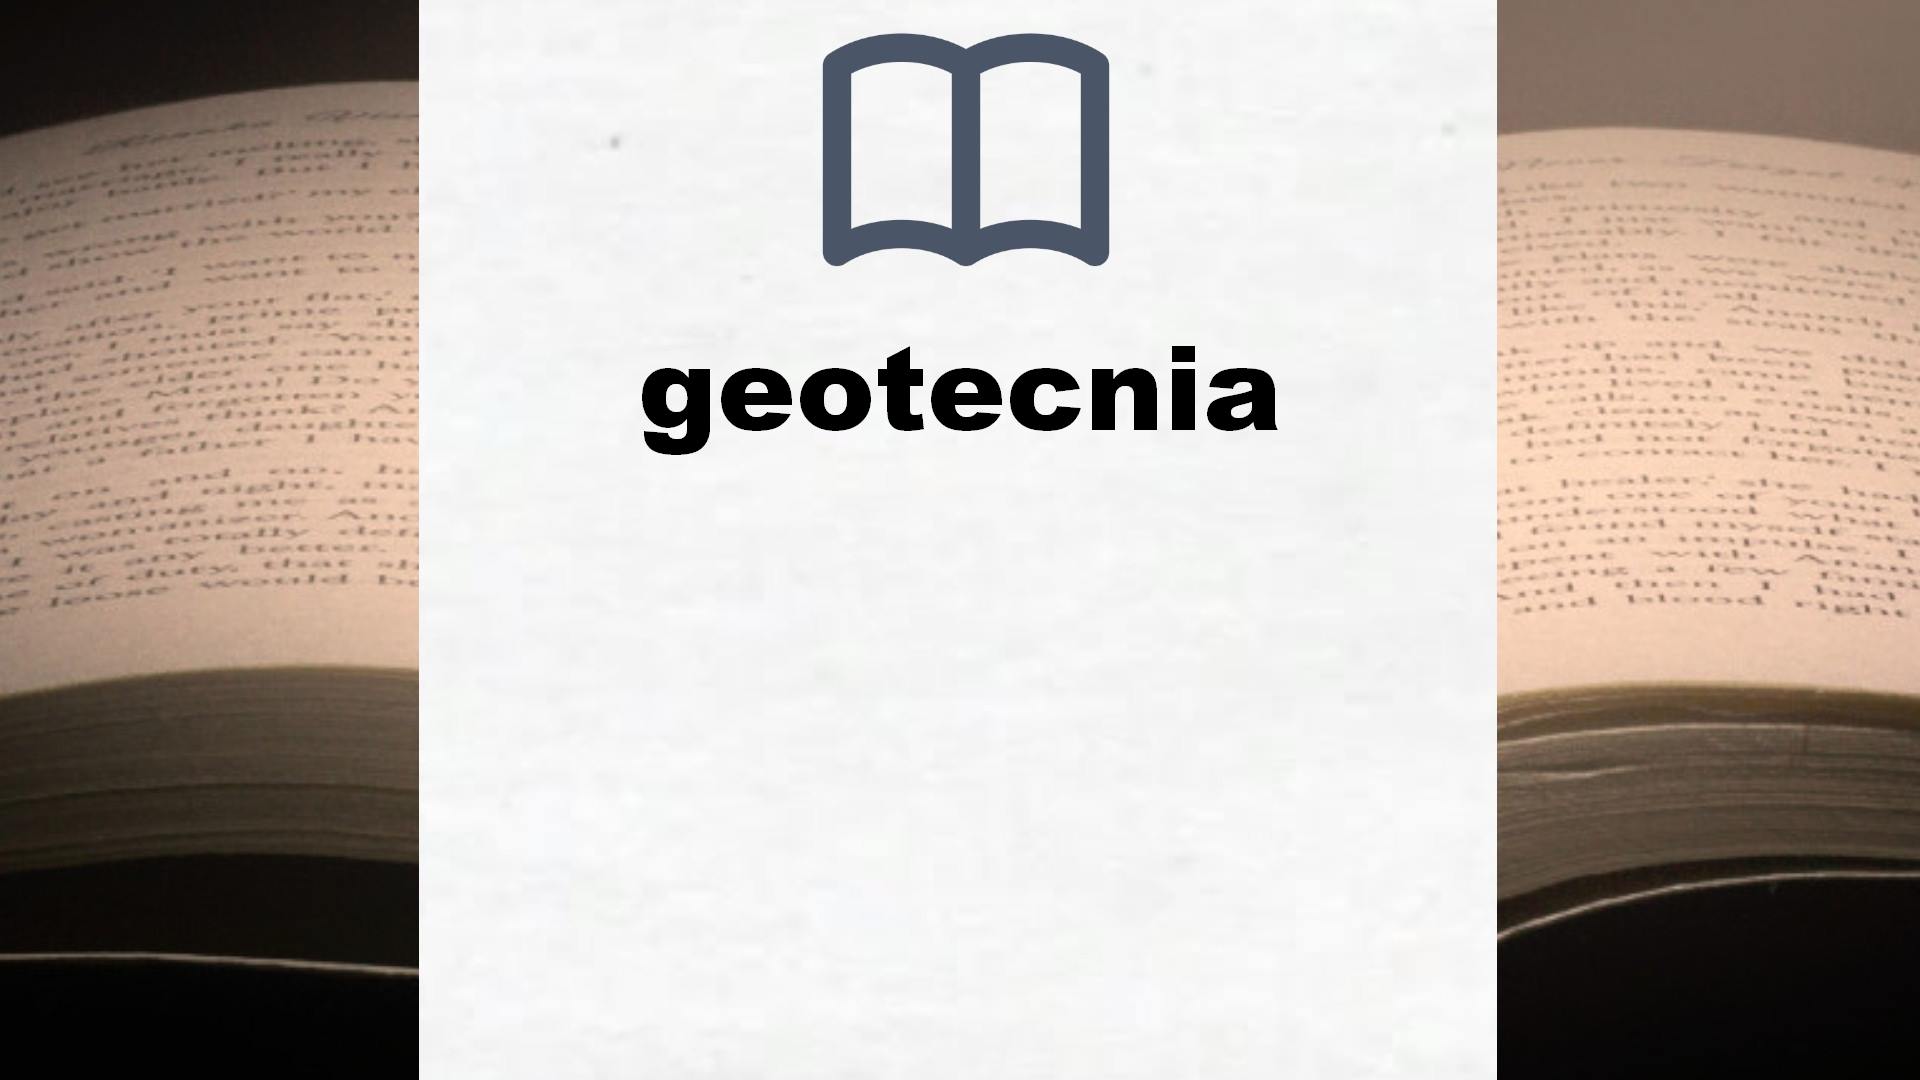 Libros sobre geotecnia